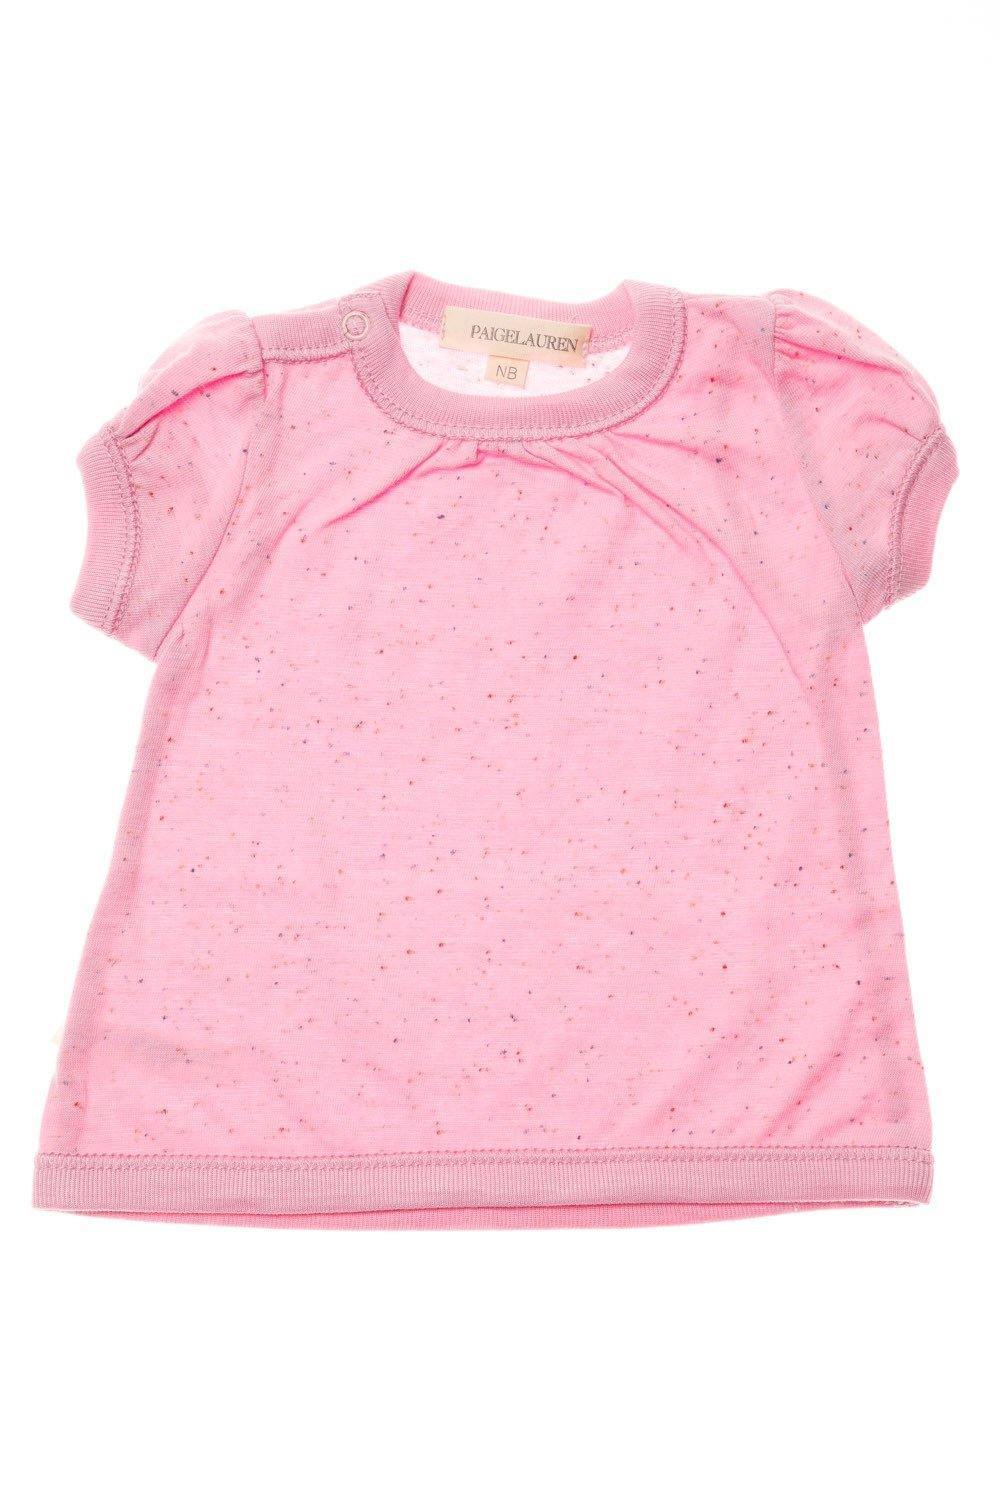 Baby Tunic Confetti-Sorbet | Newborn | Grapefruit Pink